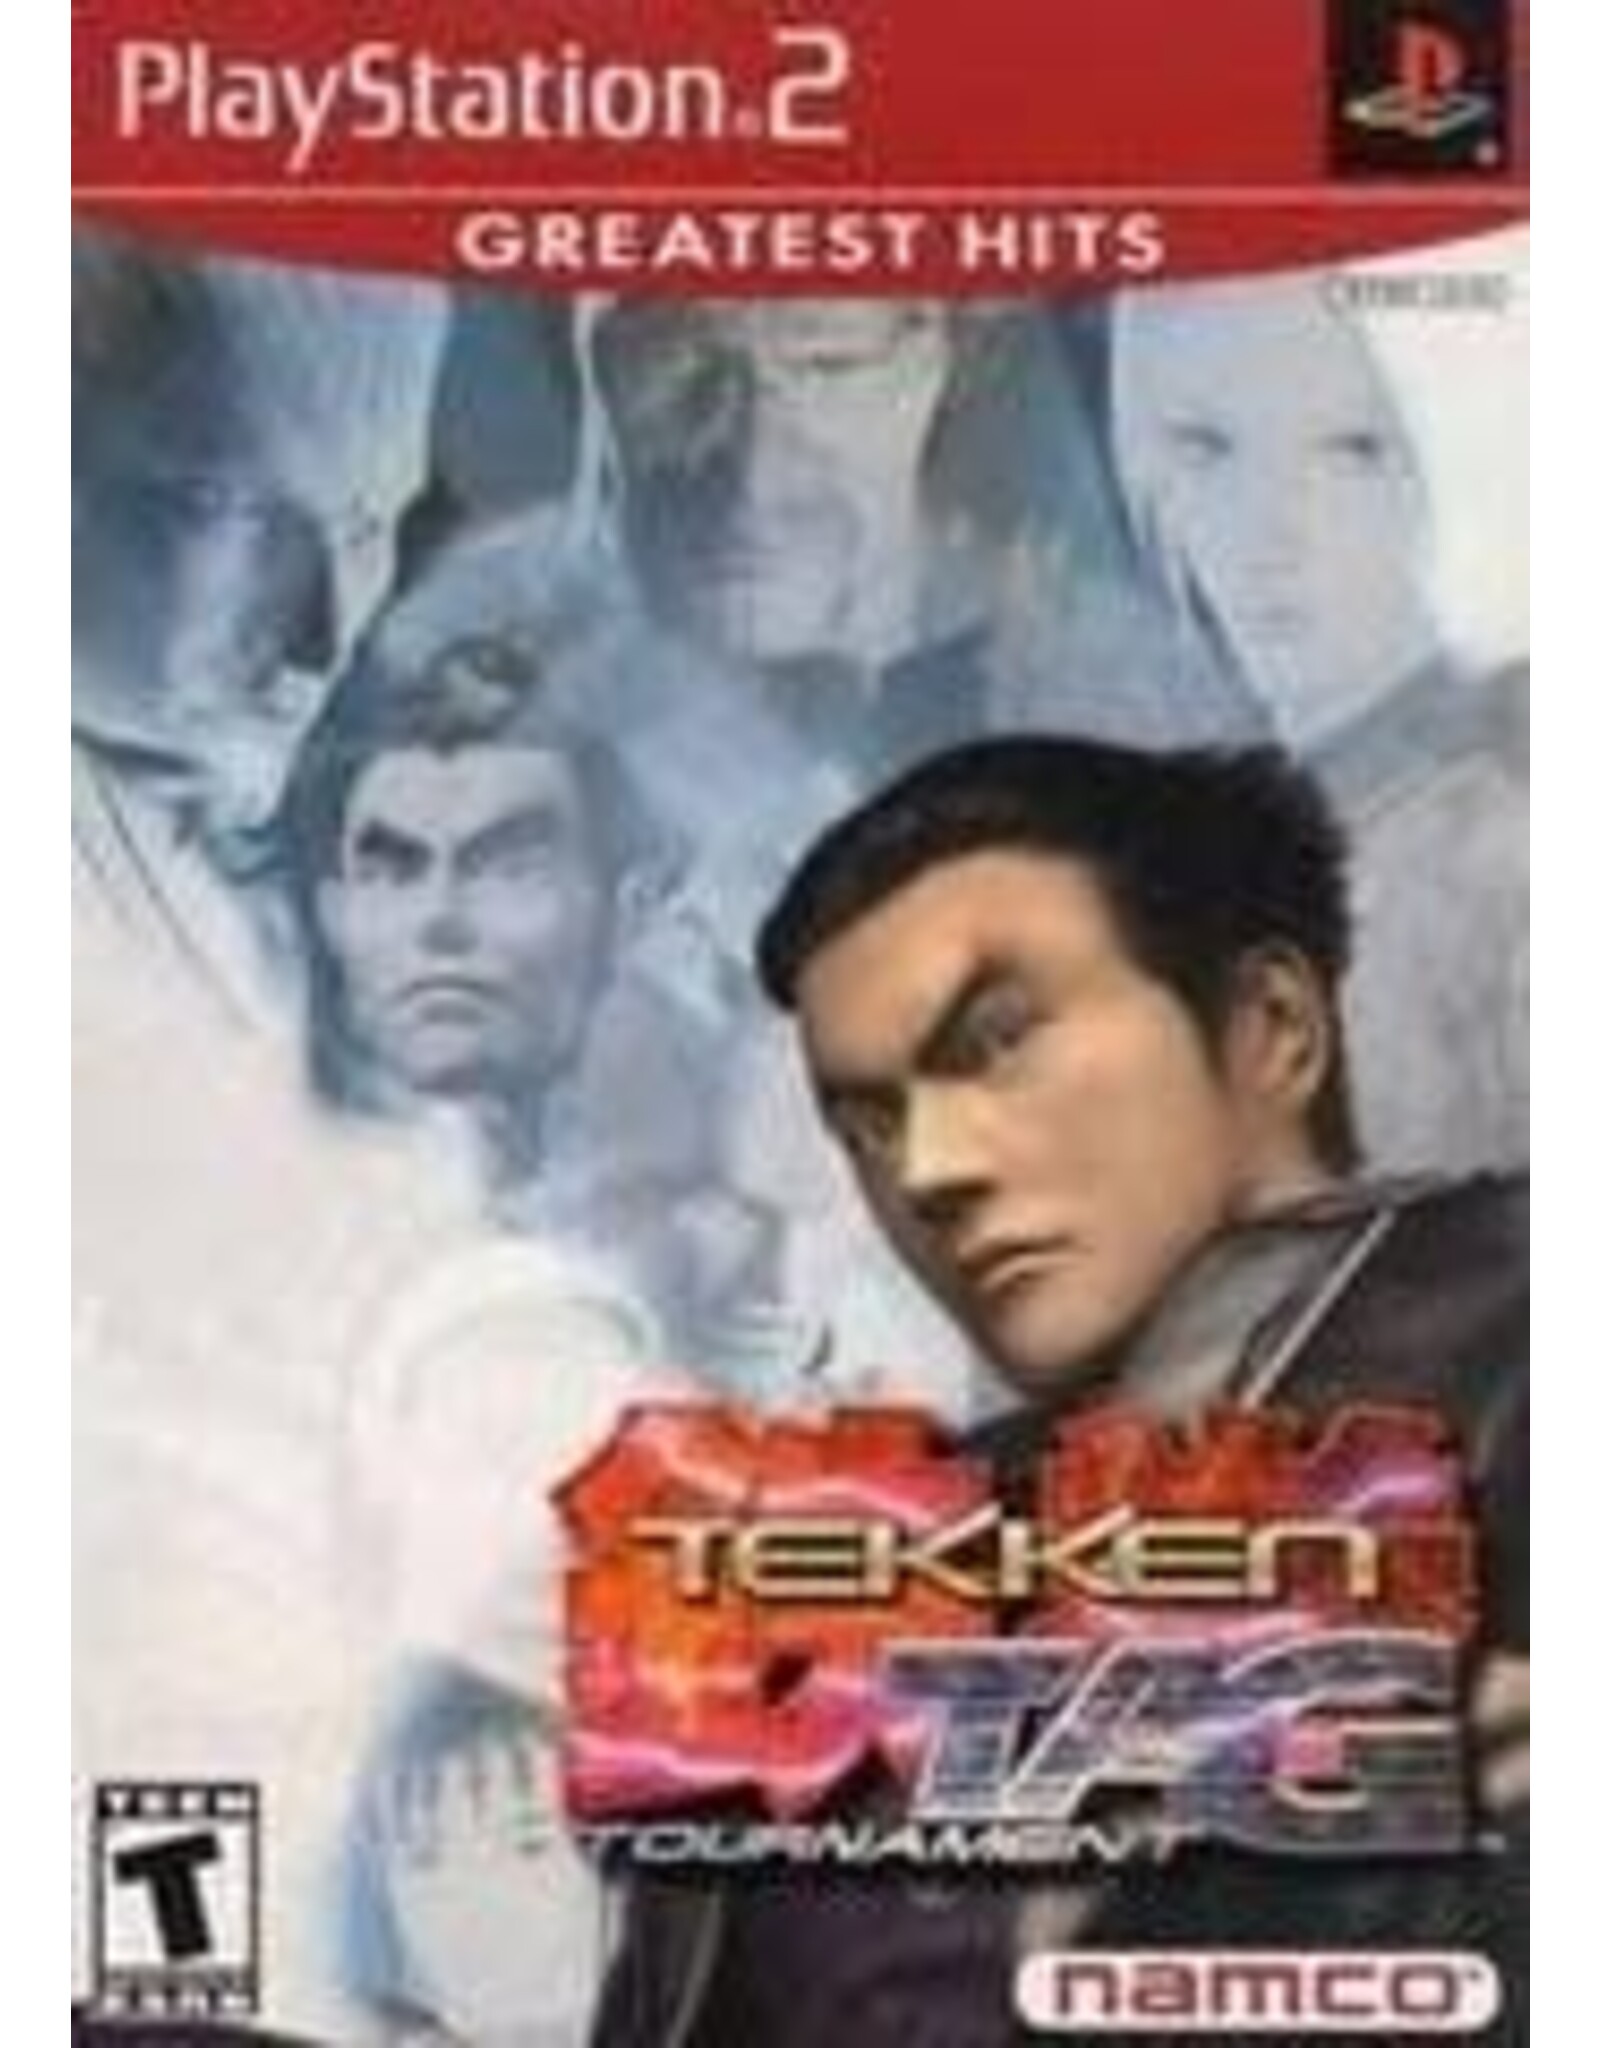 Playstation 2 Tekken Tag Tournament (Greatest Hits, No Manual)